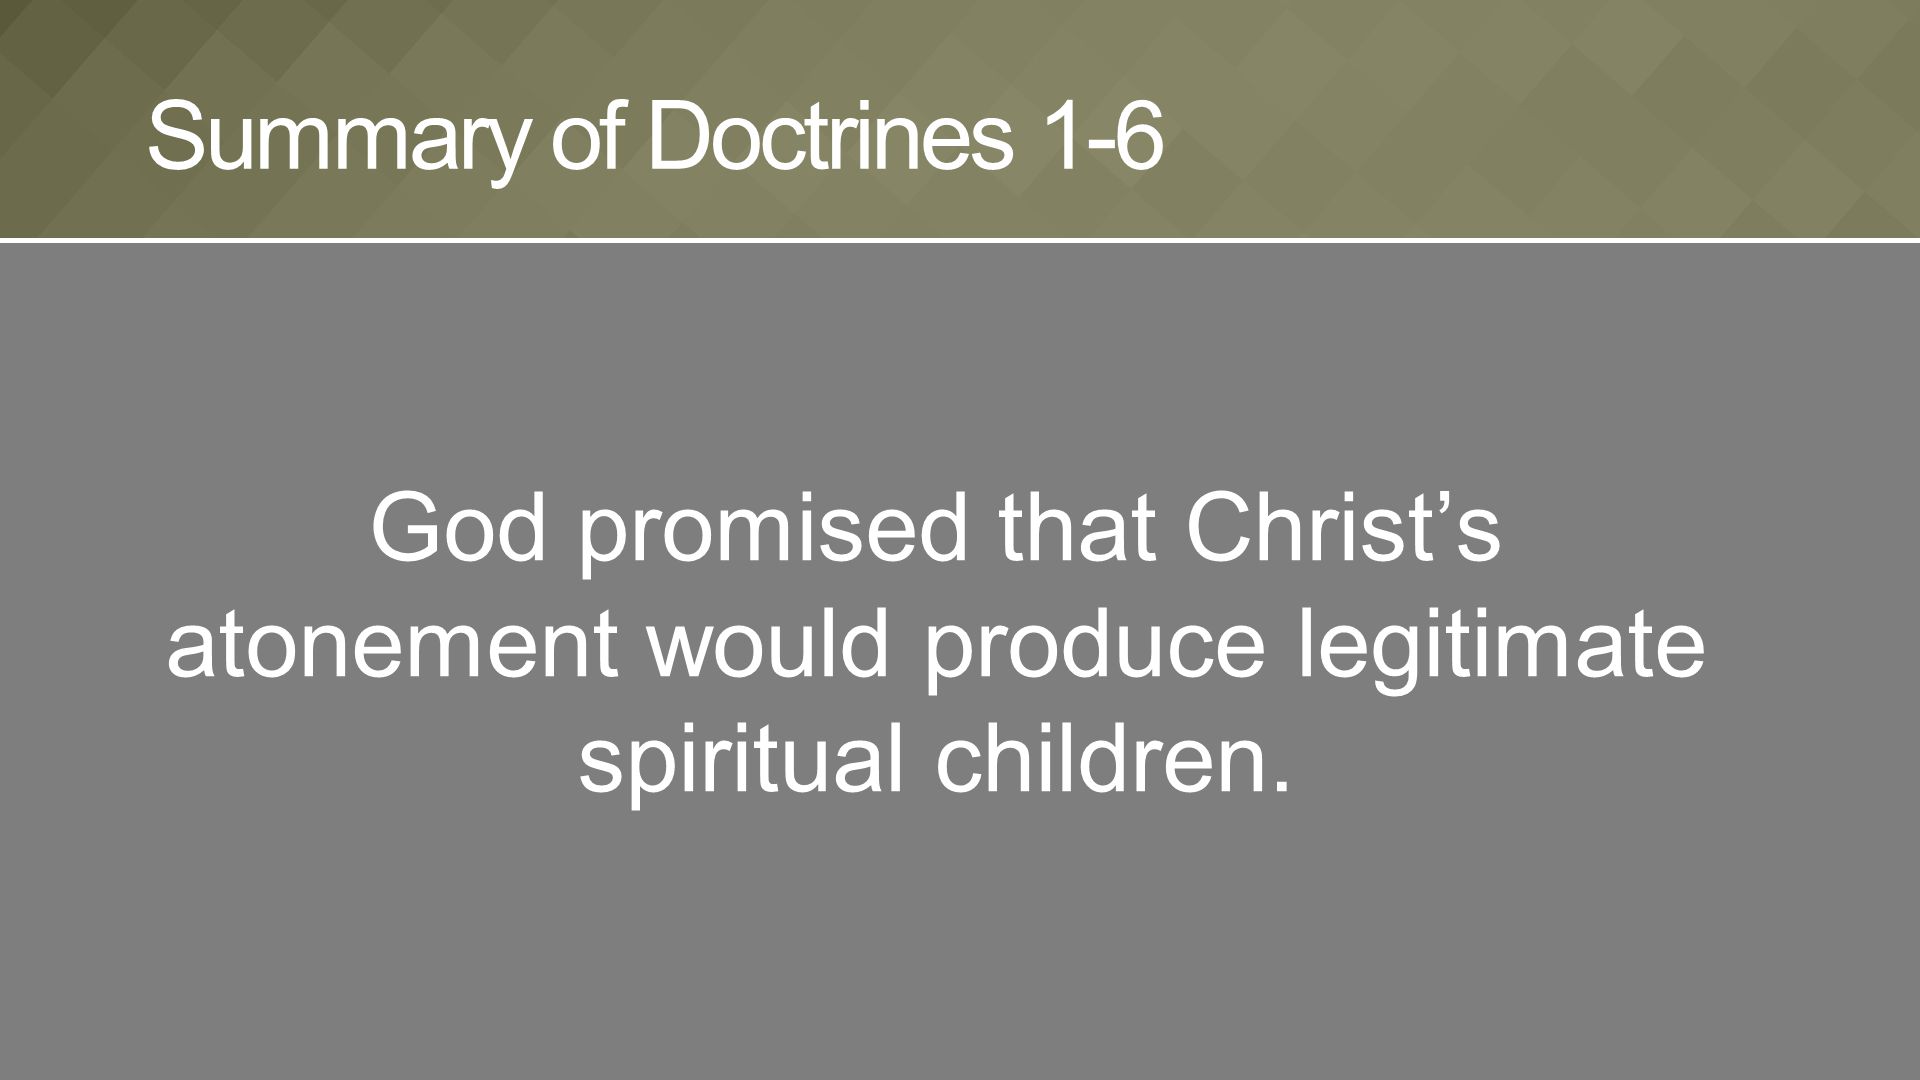 God promised that Christ’s atonement would produce legitimate spiritual children.